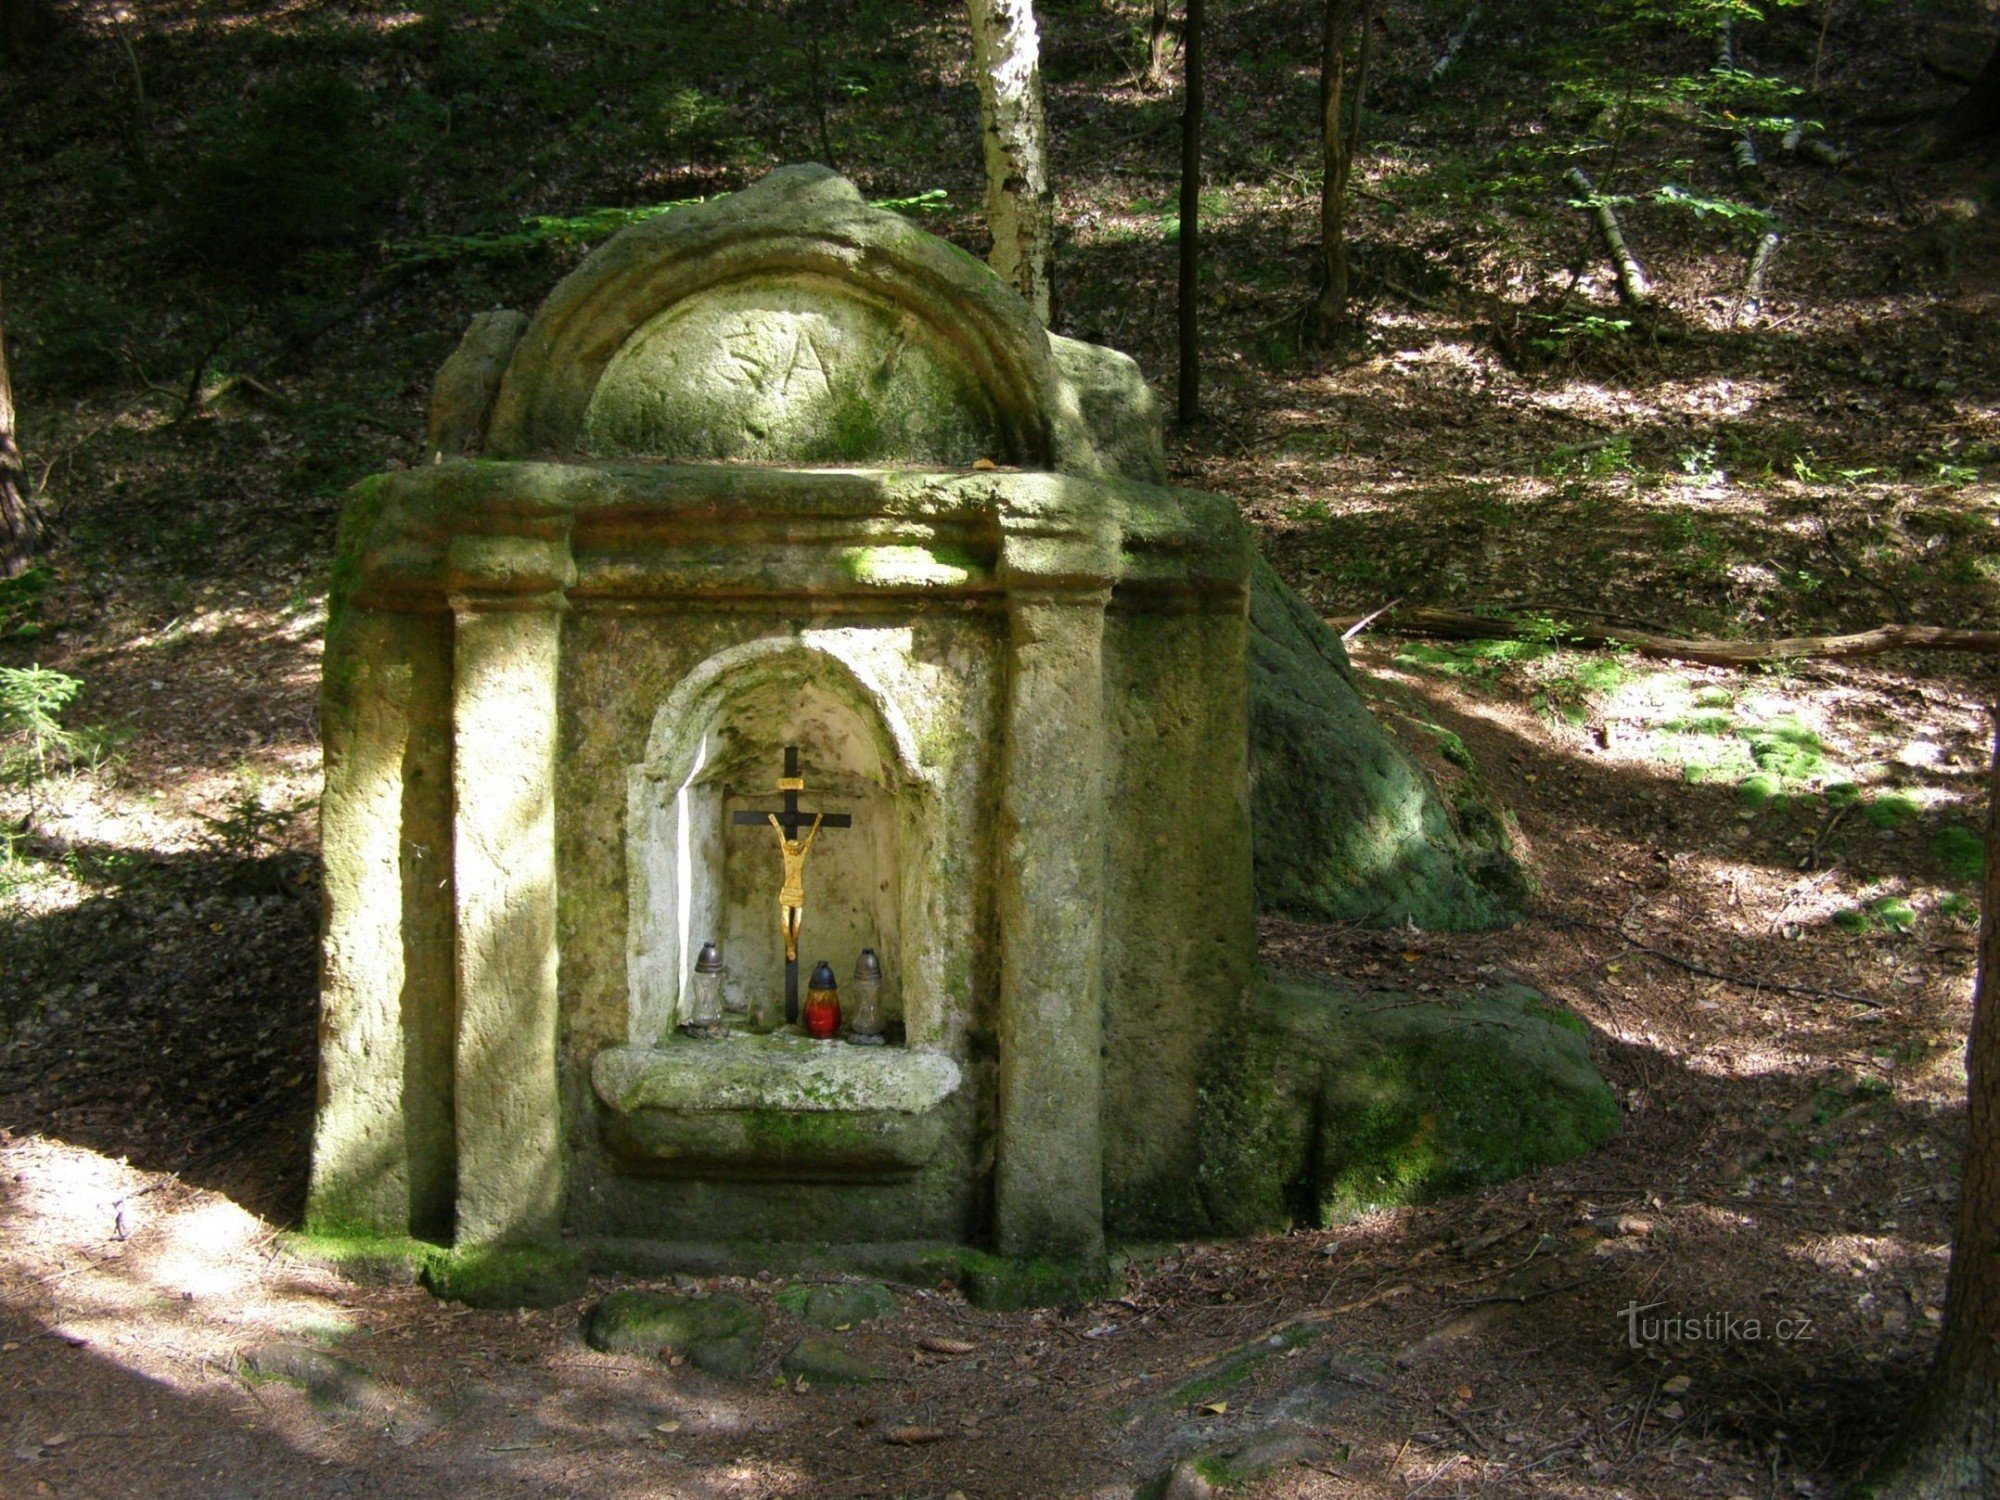 kapela u kamenoj niši u klancu Boudecka